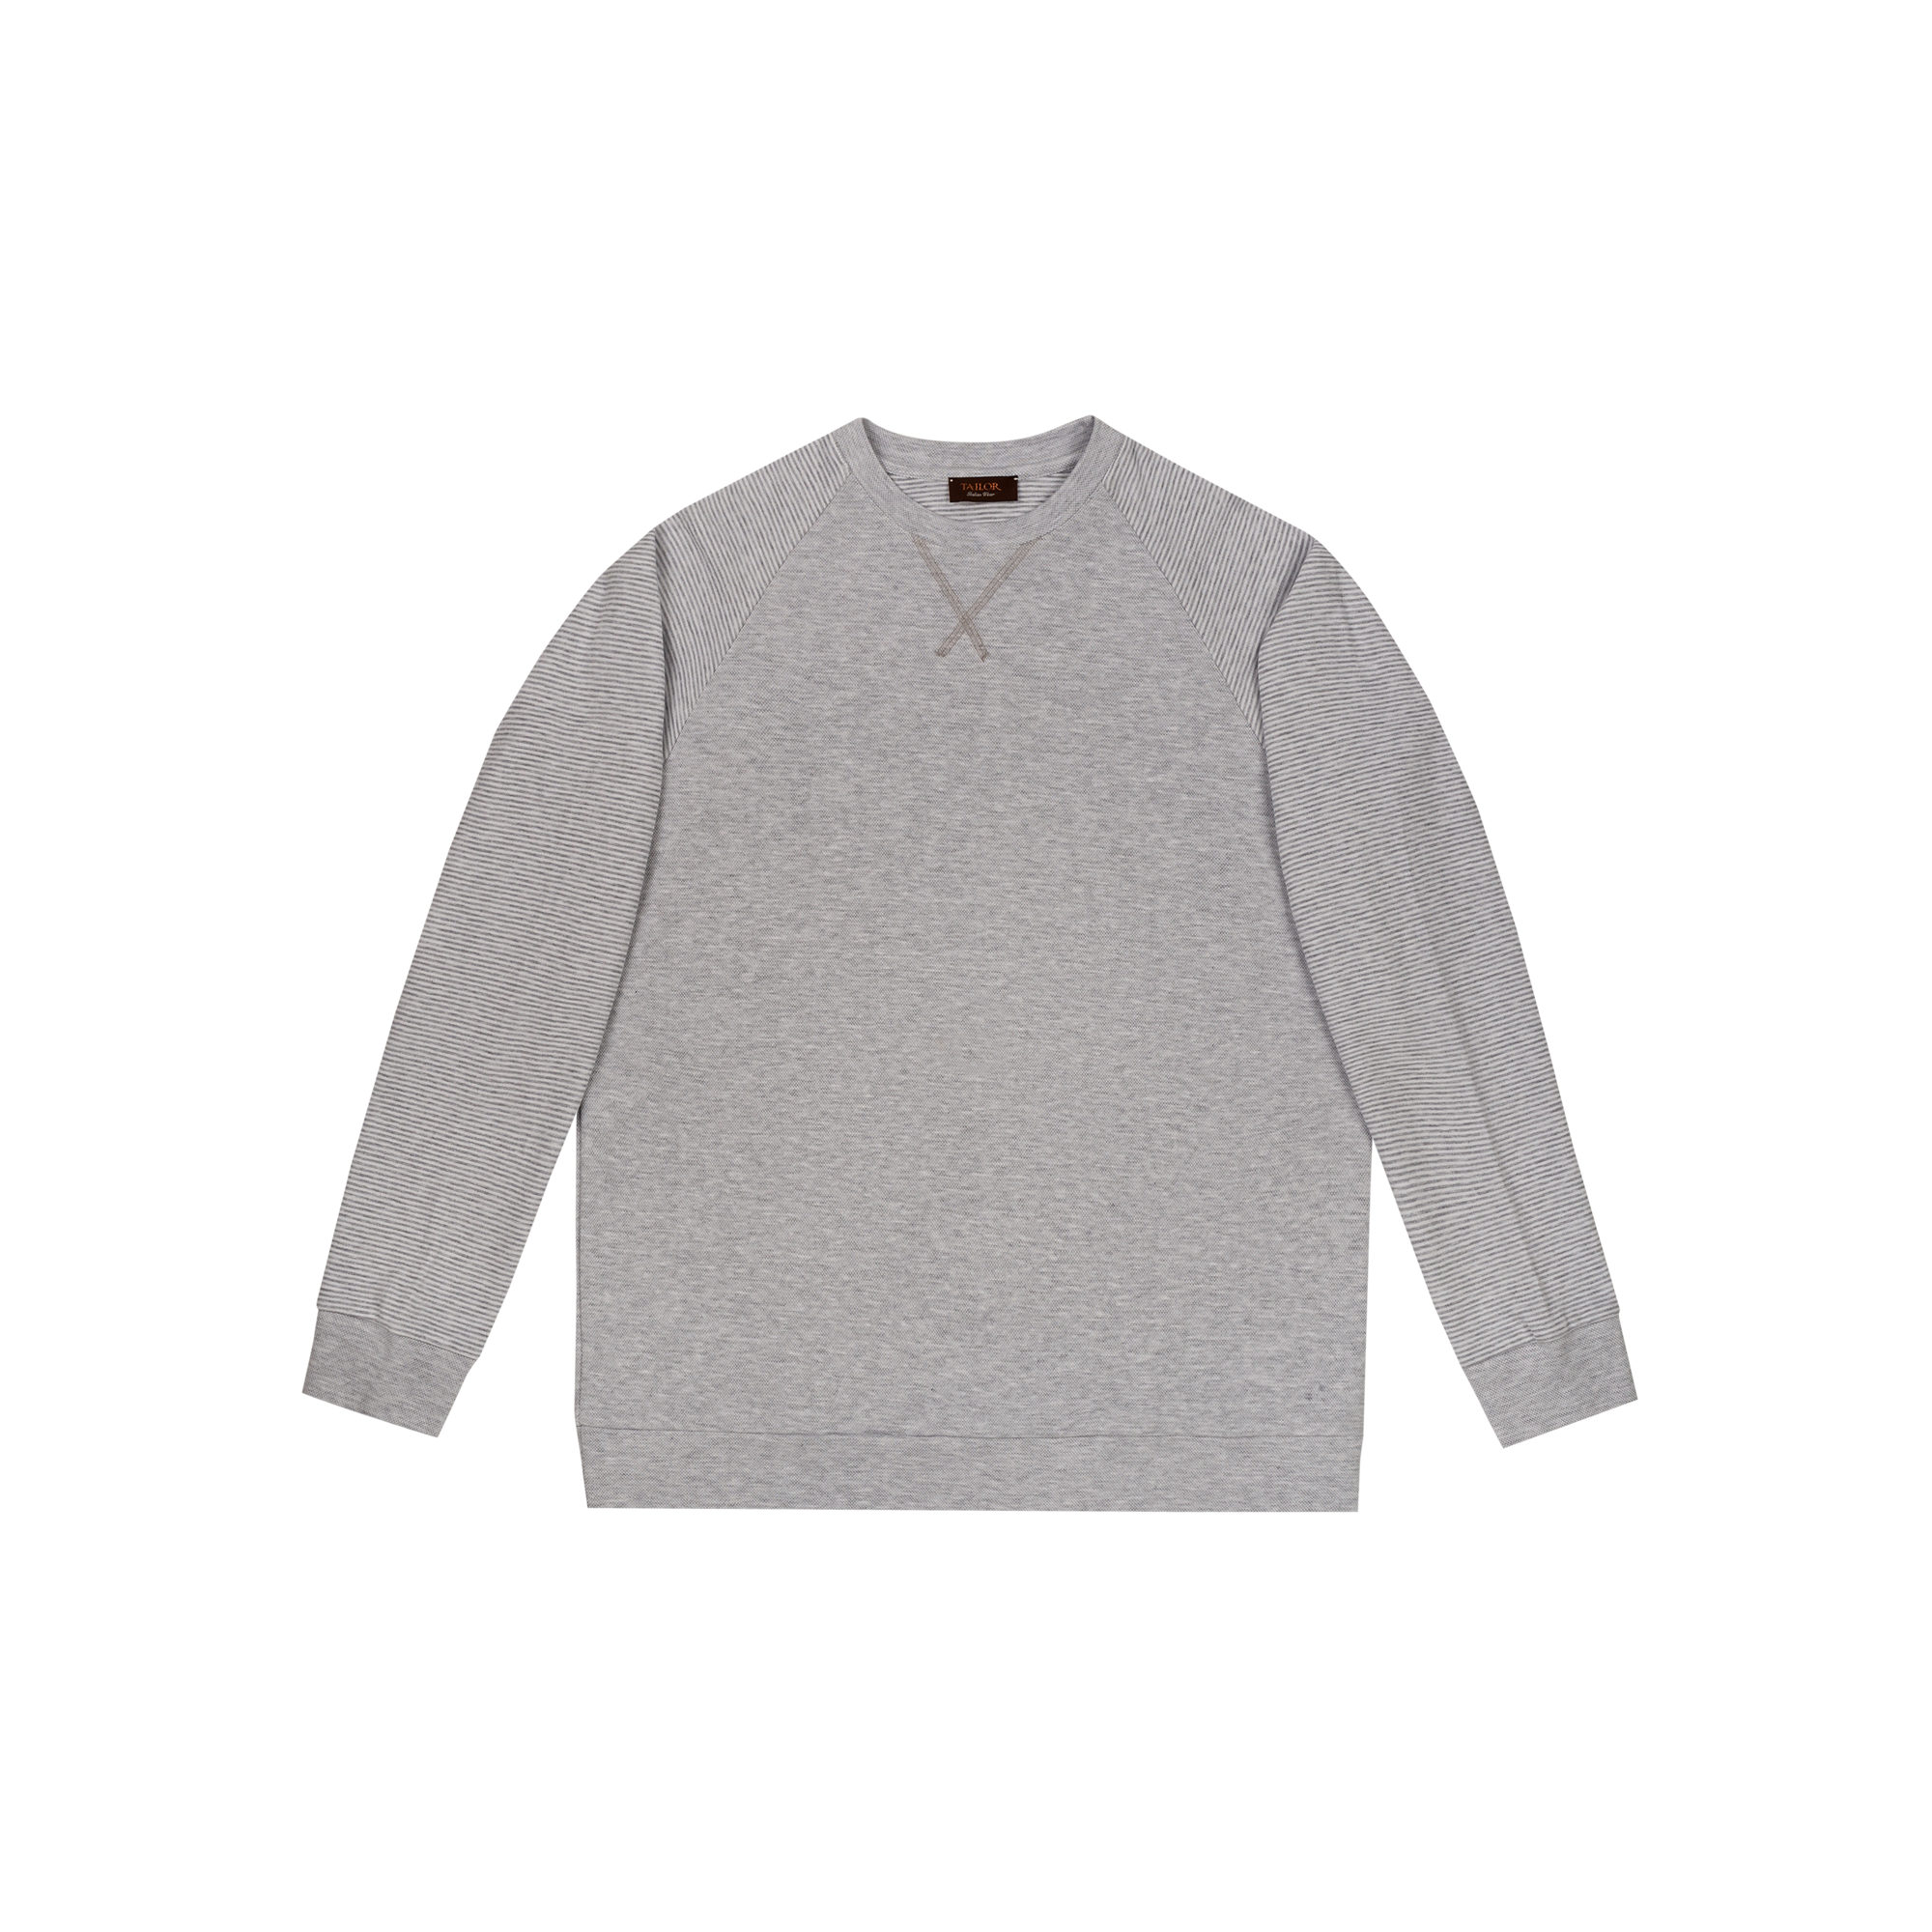 Men's Gray Crewneck Sweater